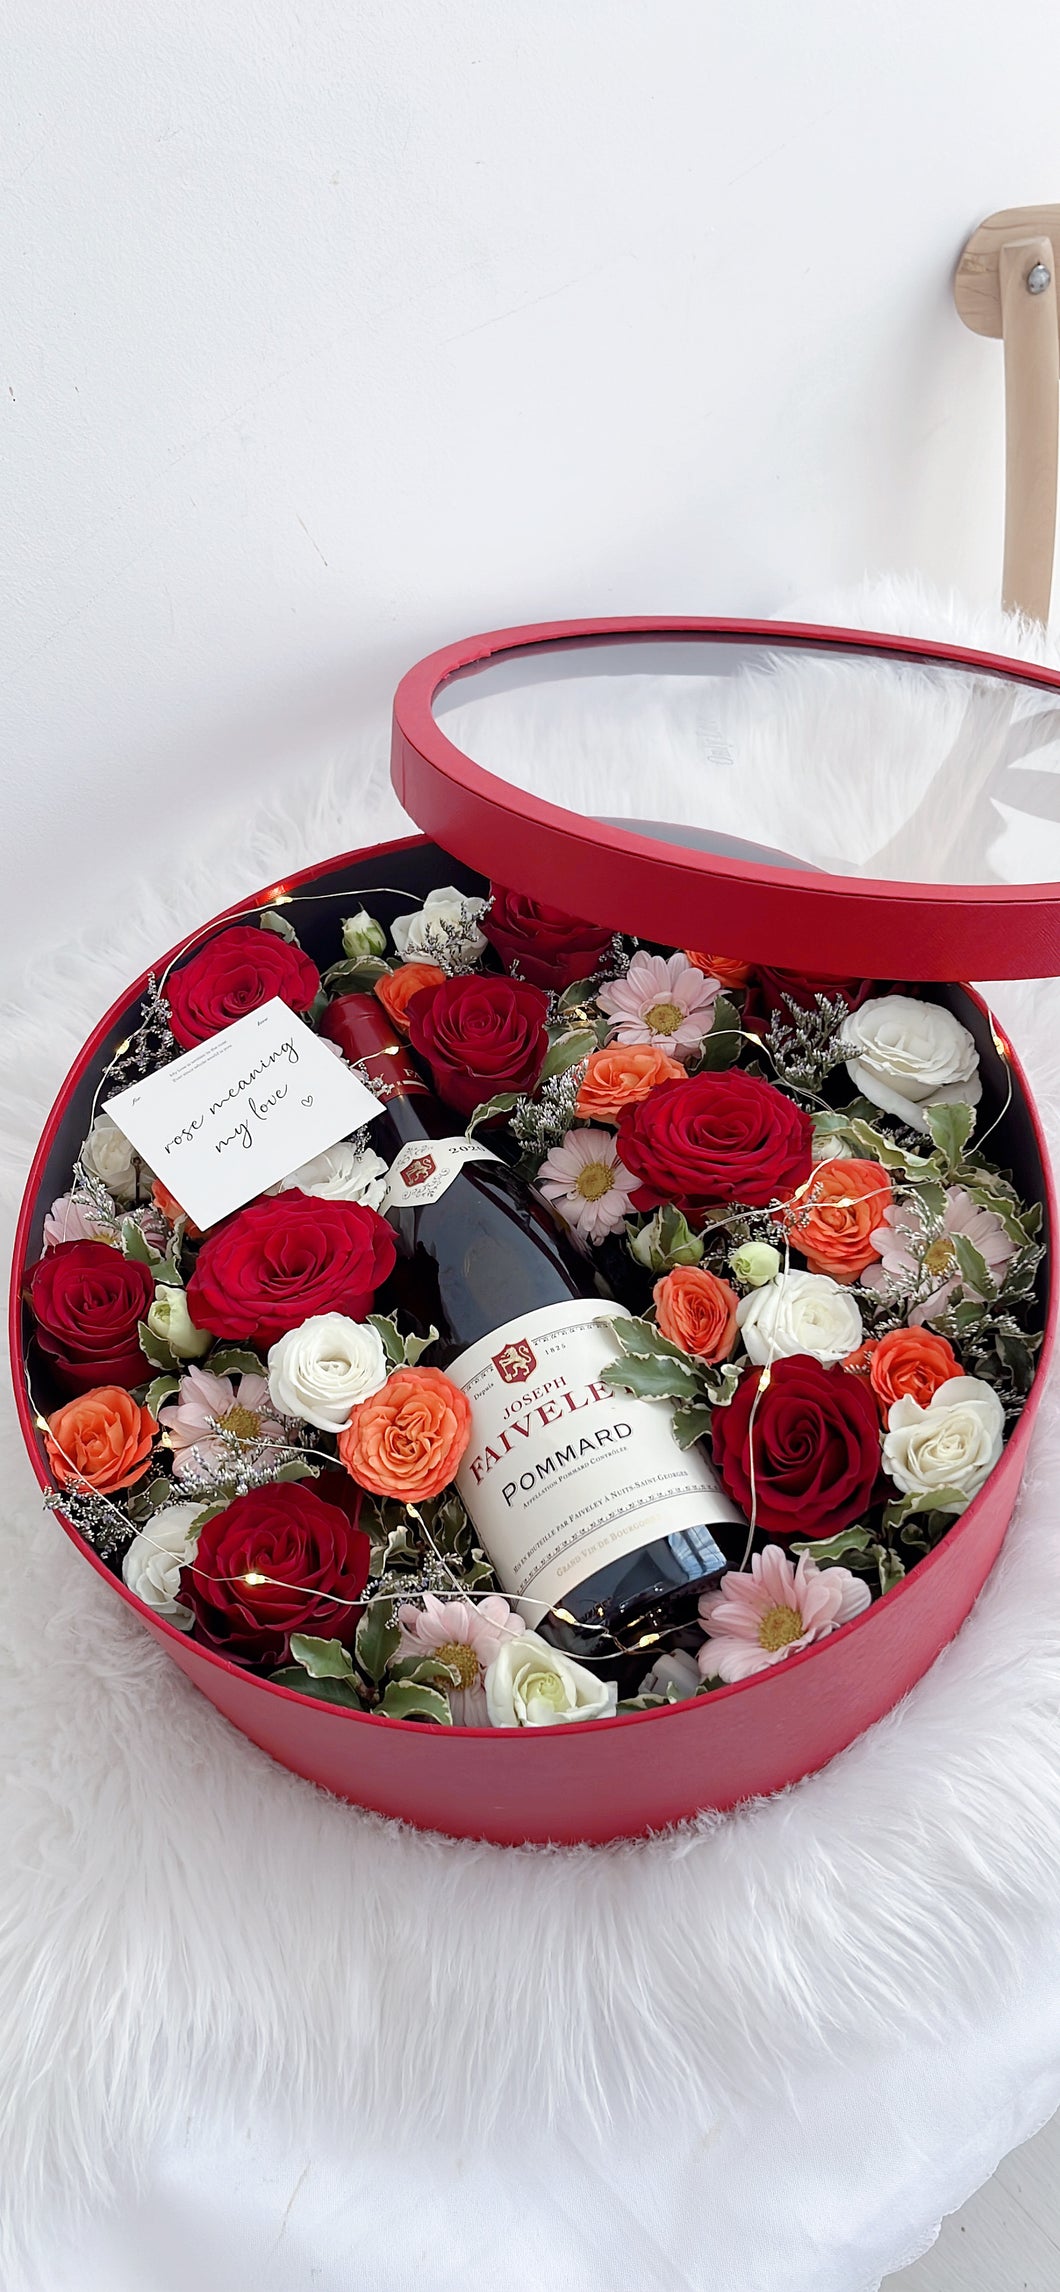 ’Joseph Faiveley Pommard‘ Red Wine Flower Box 红酒鲜花盒